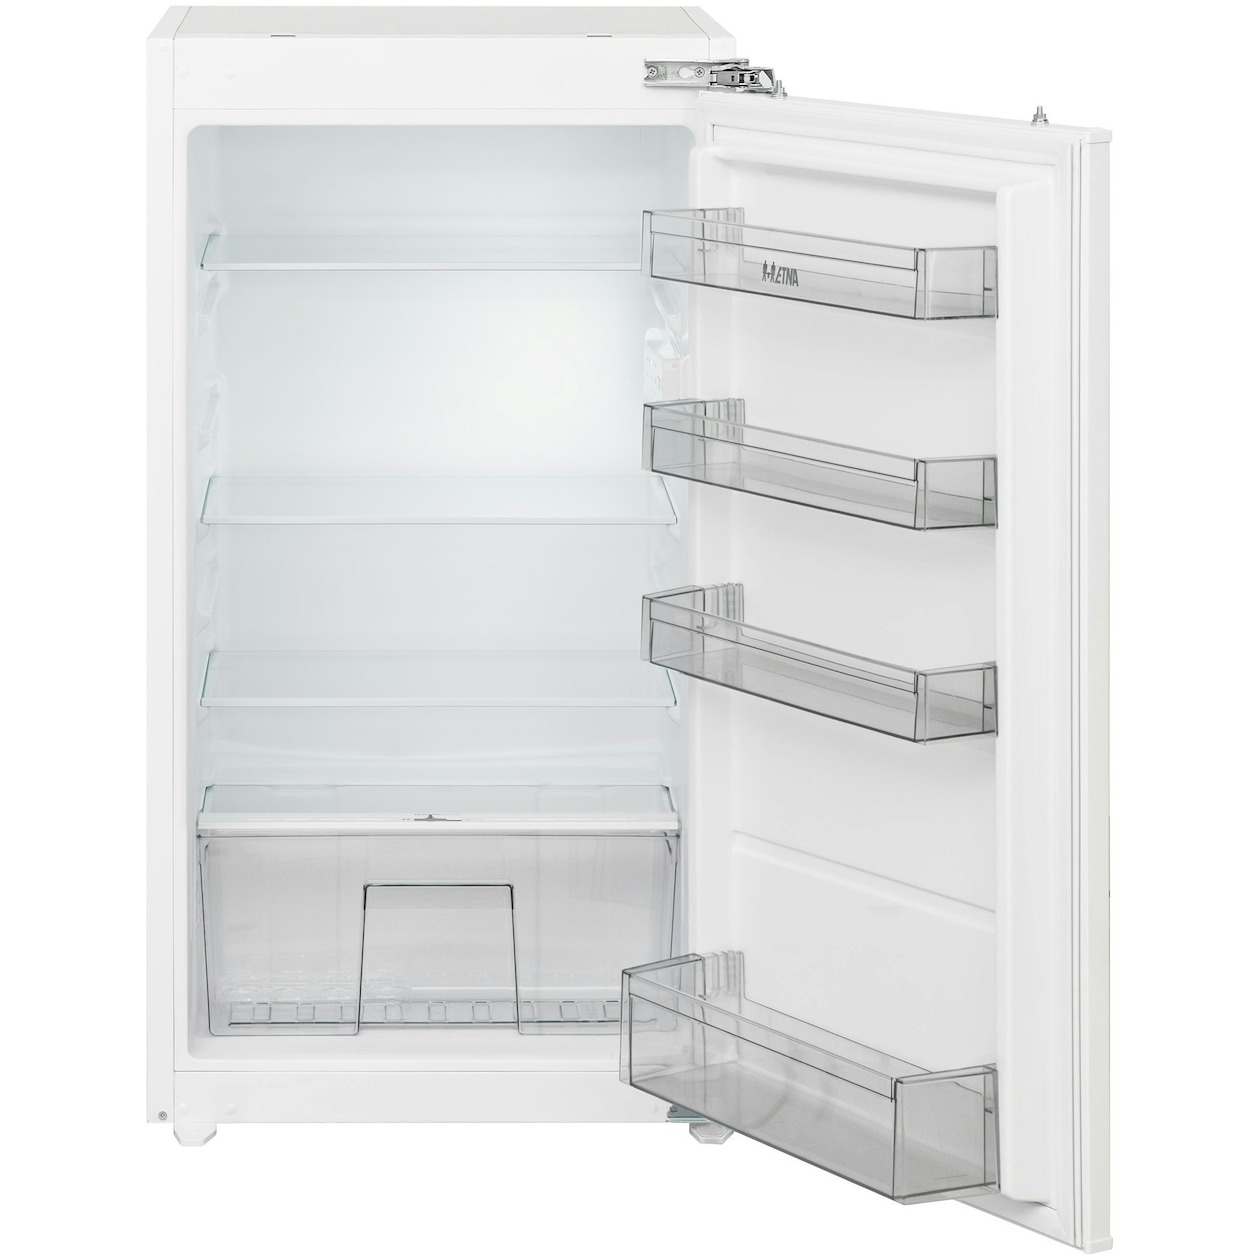 Etna KKD7102 Inbouw koelkast zonder vriesvak